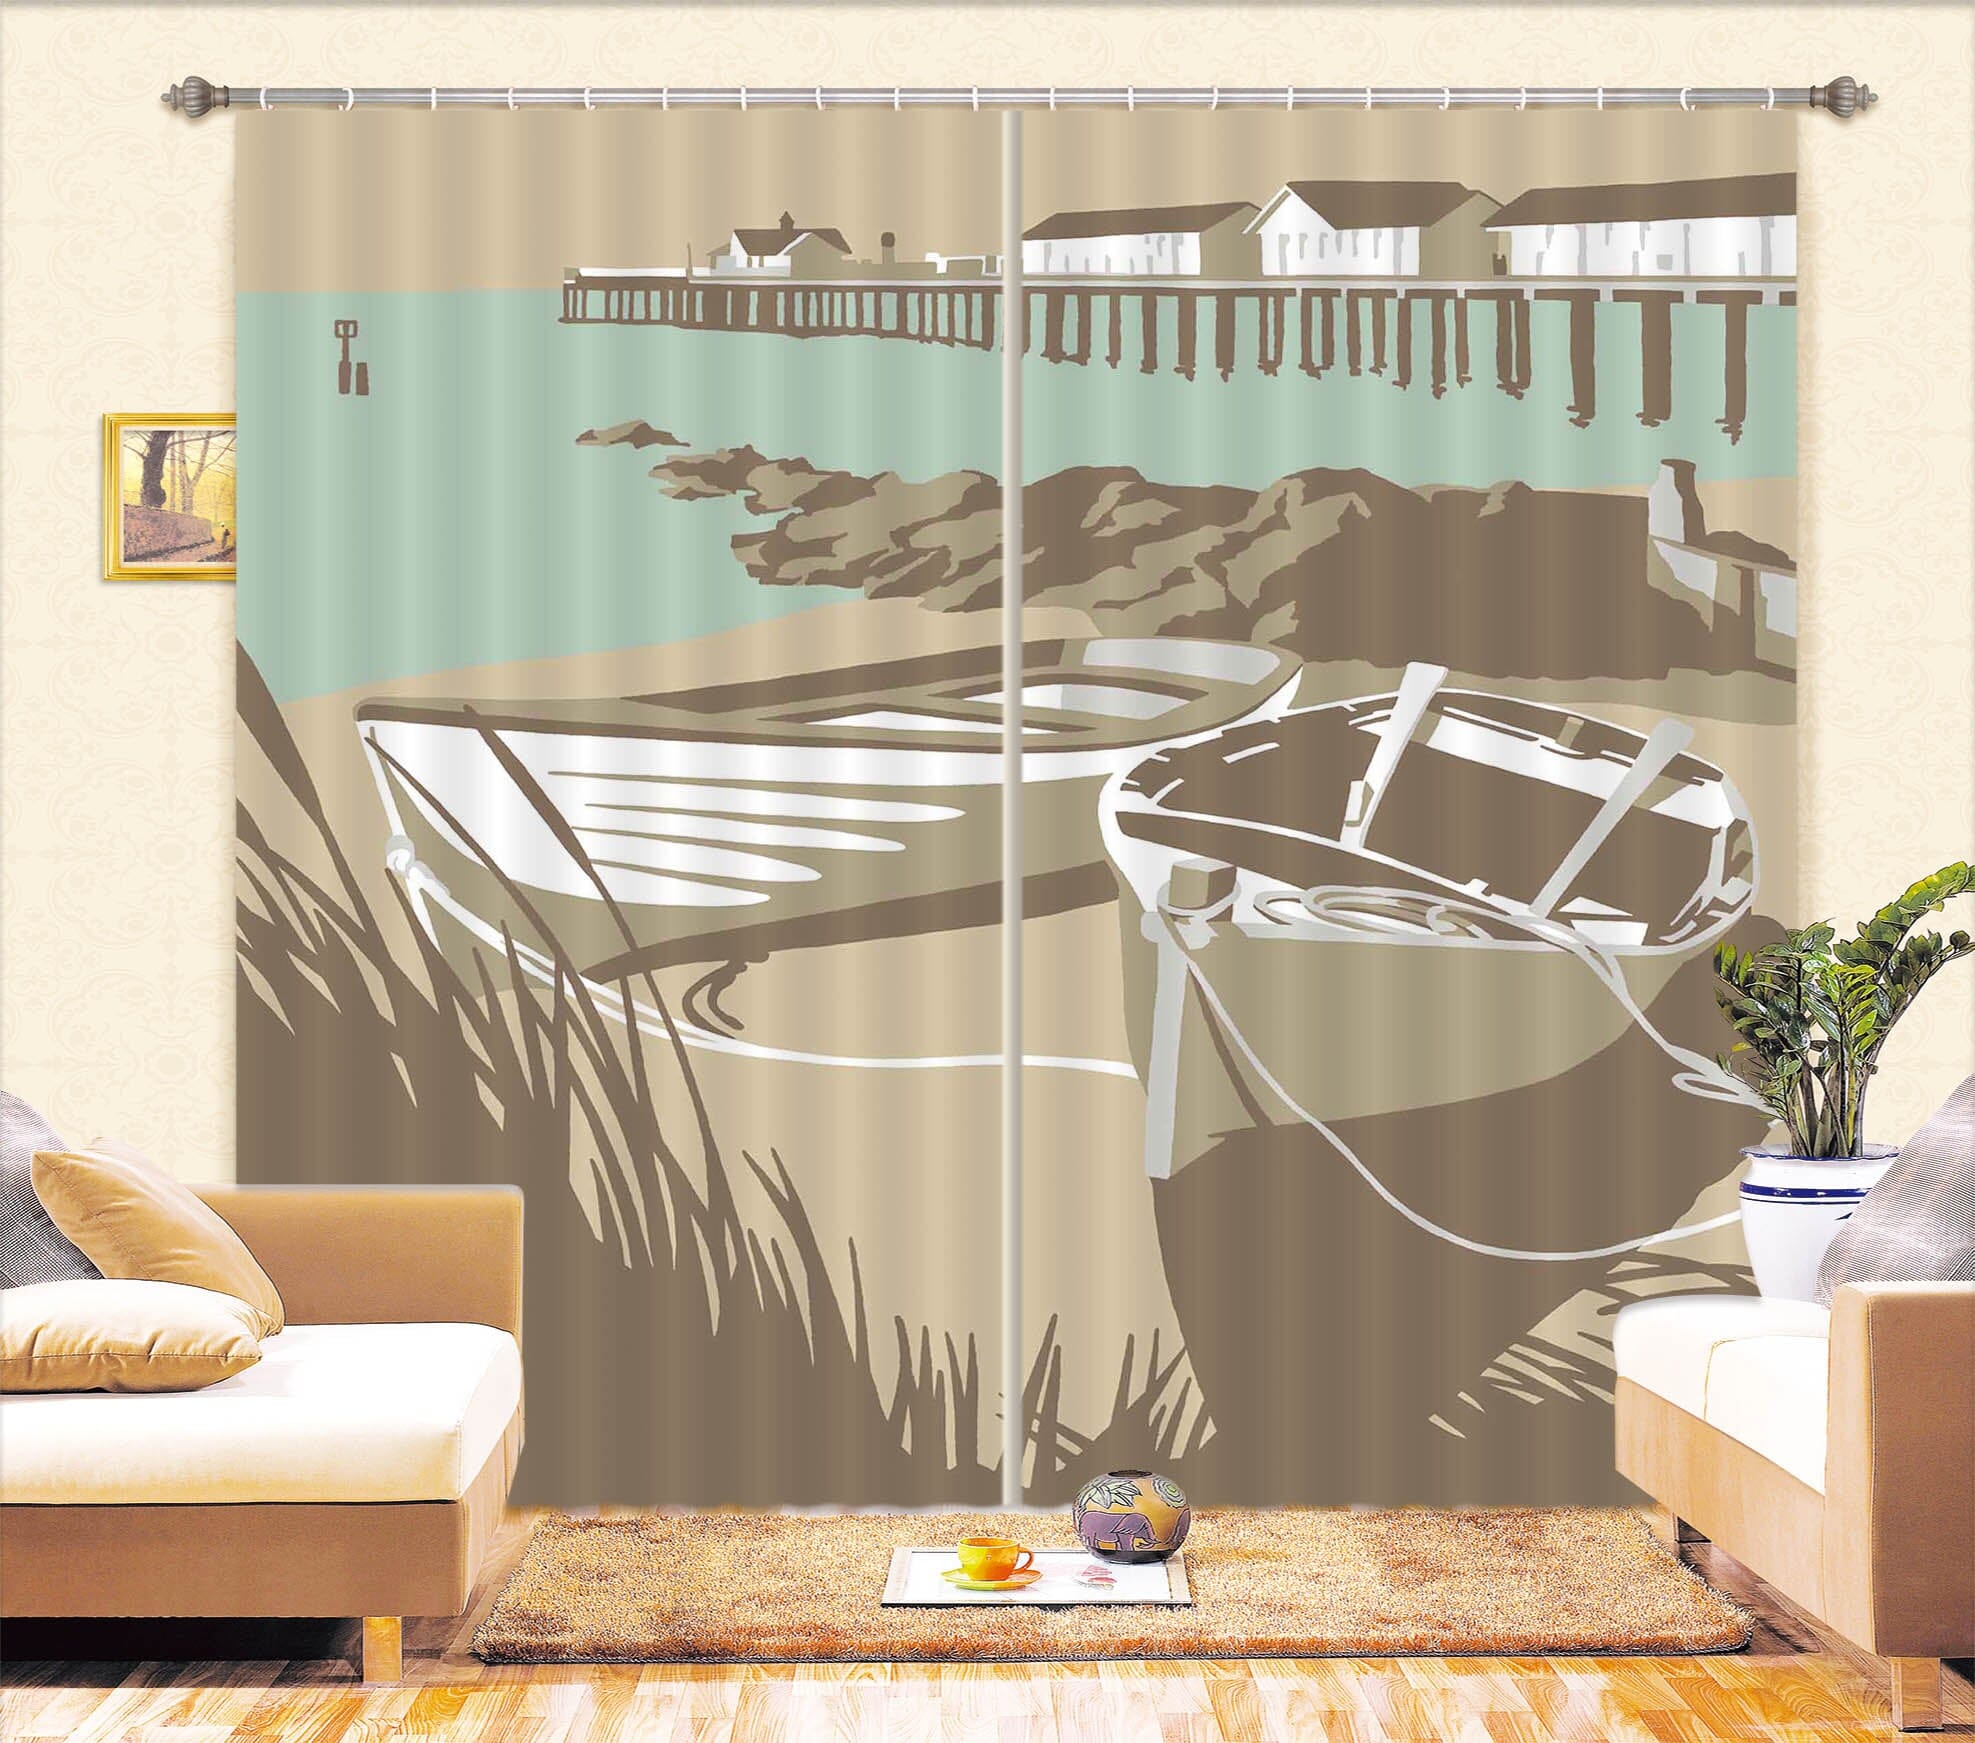 3D Southwold Boats Pier 149 Steve Read Curtain Curtains Drapes Curtains AJ Creativity Home 